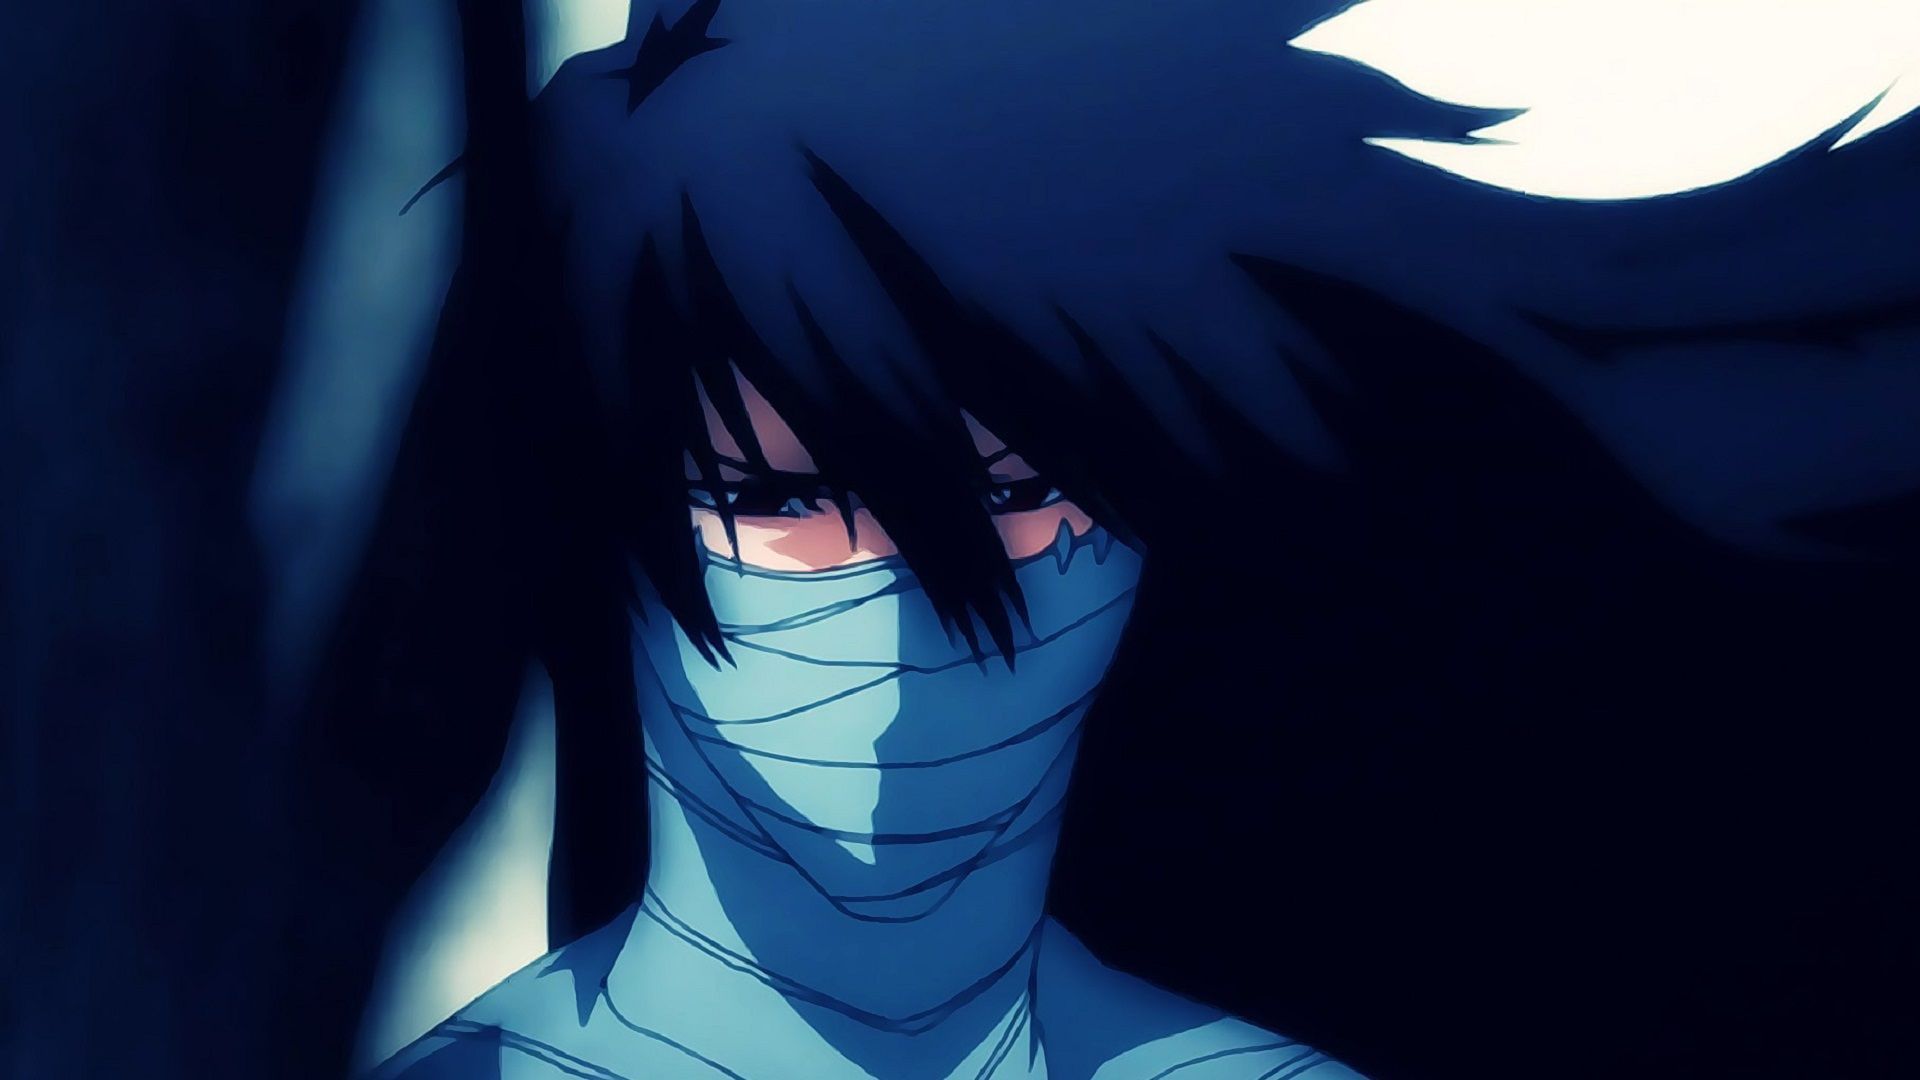 Ichigo becoming Getsuga (Image via Studio Pierrot, Bleach)